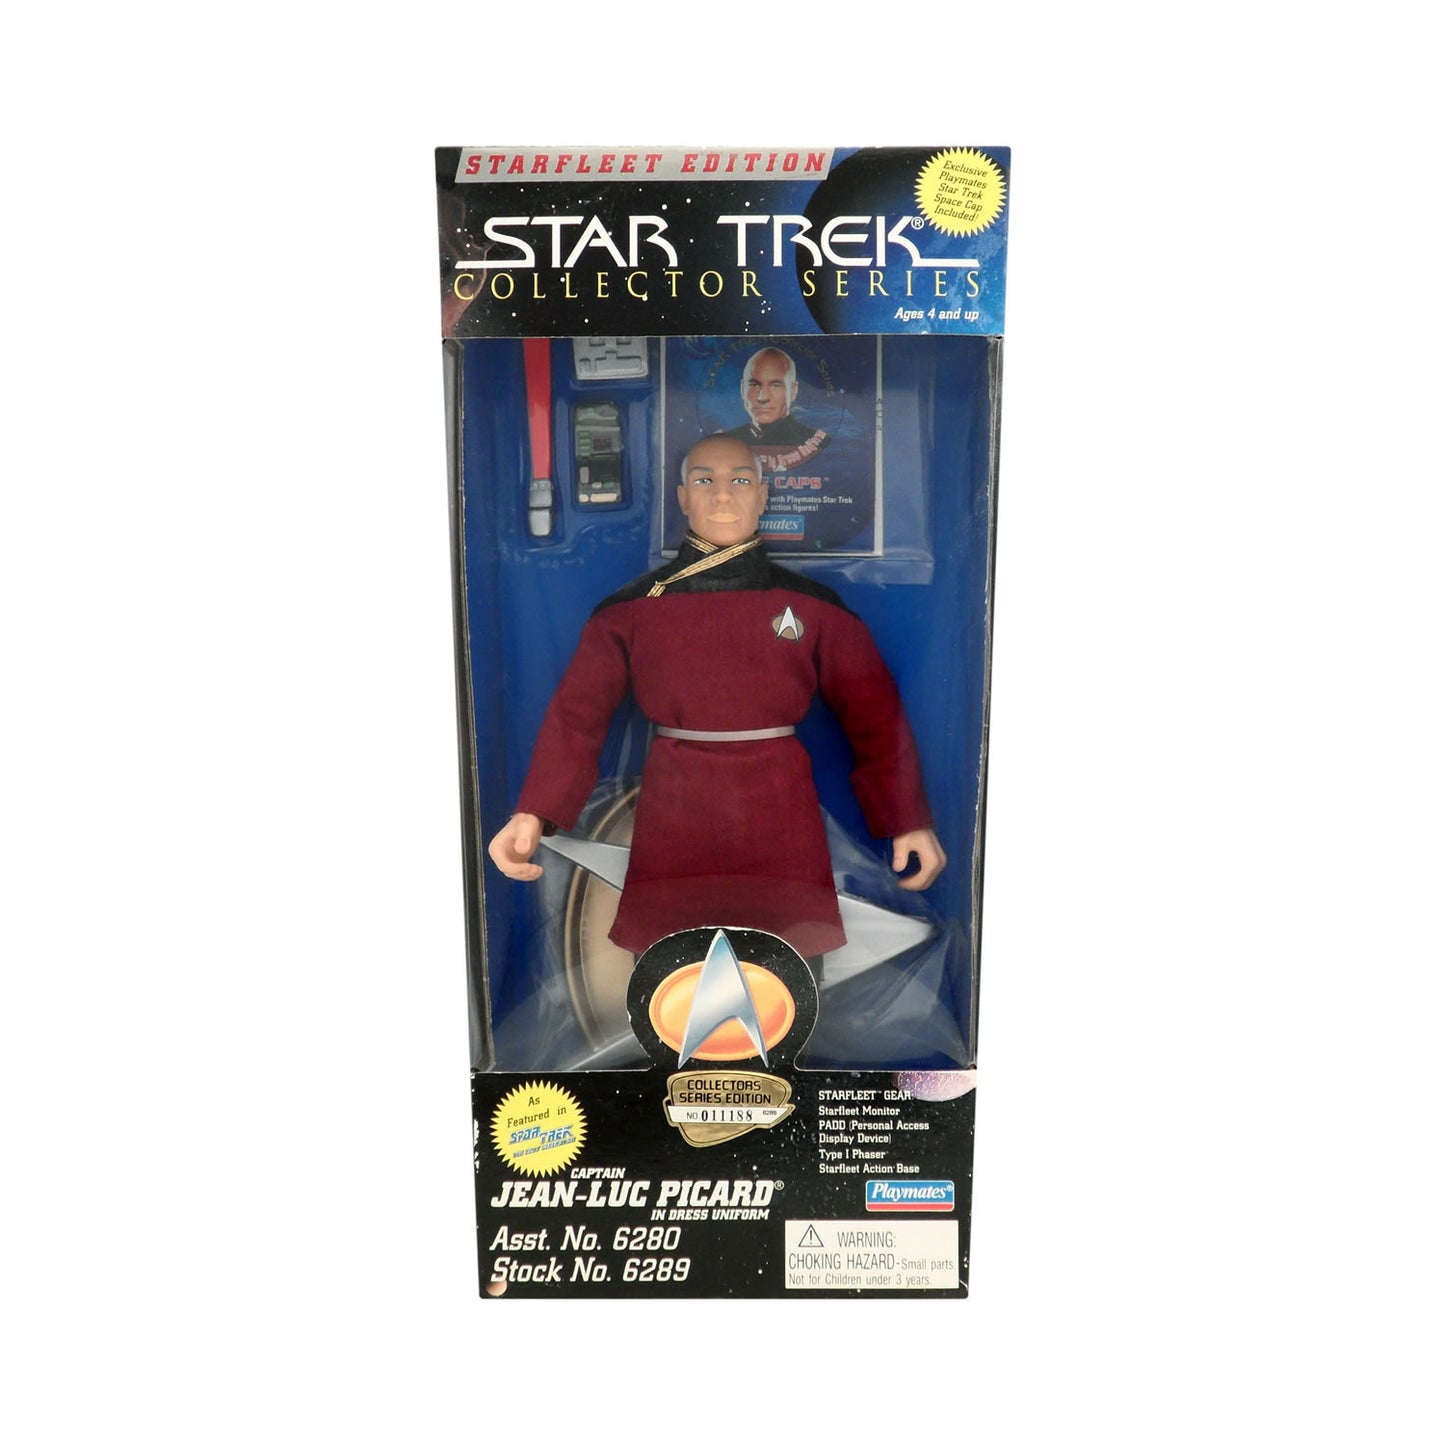 Star Trek Collector Series Captain Jean-Luc Picard in Dress Uniform